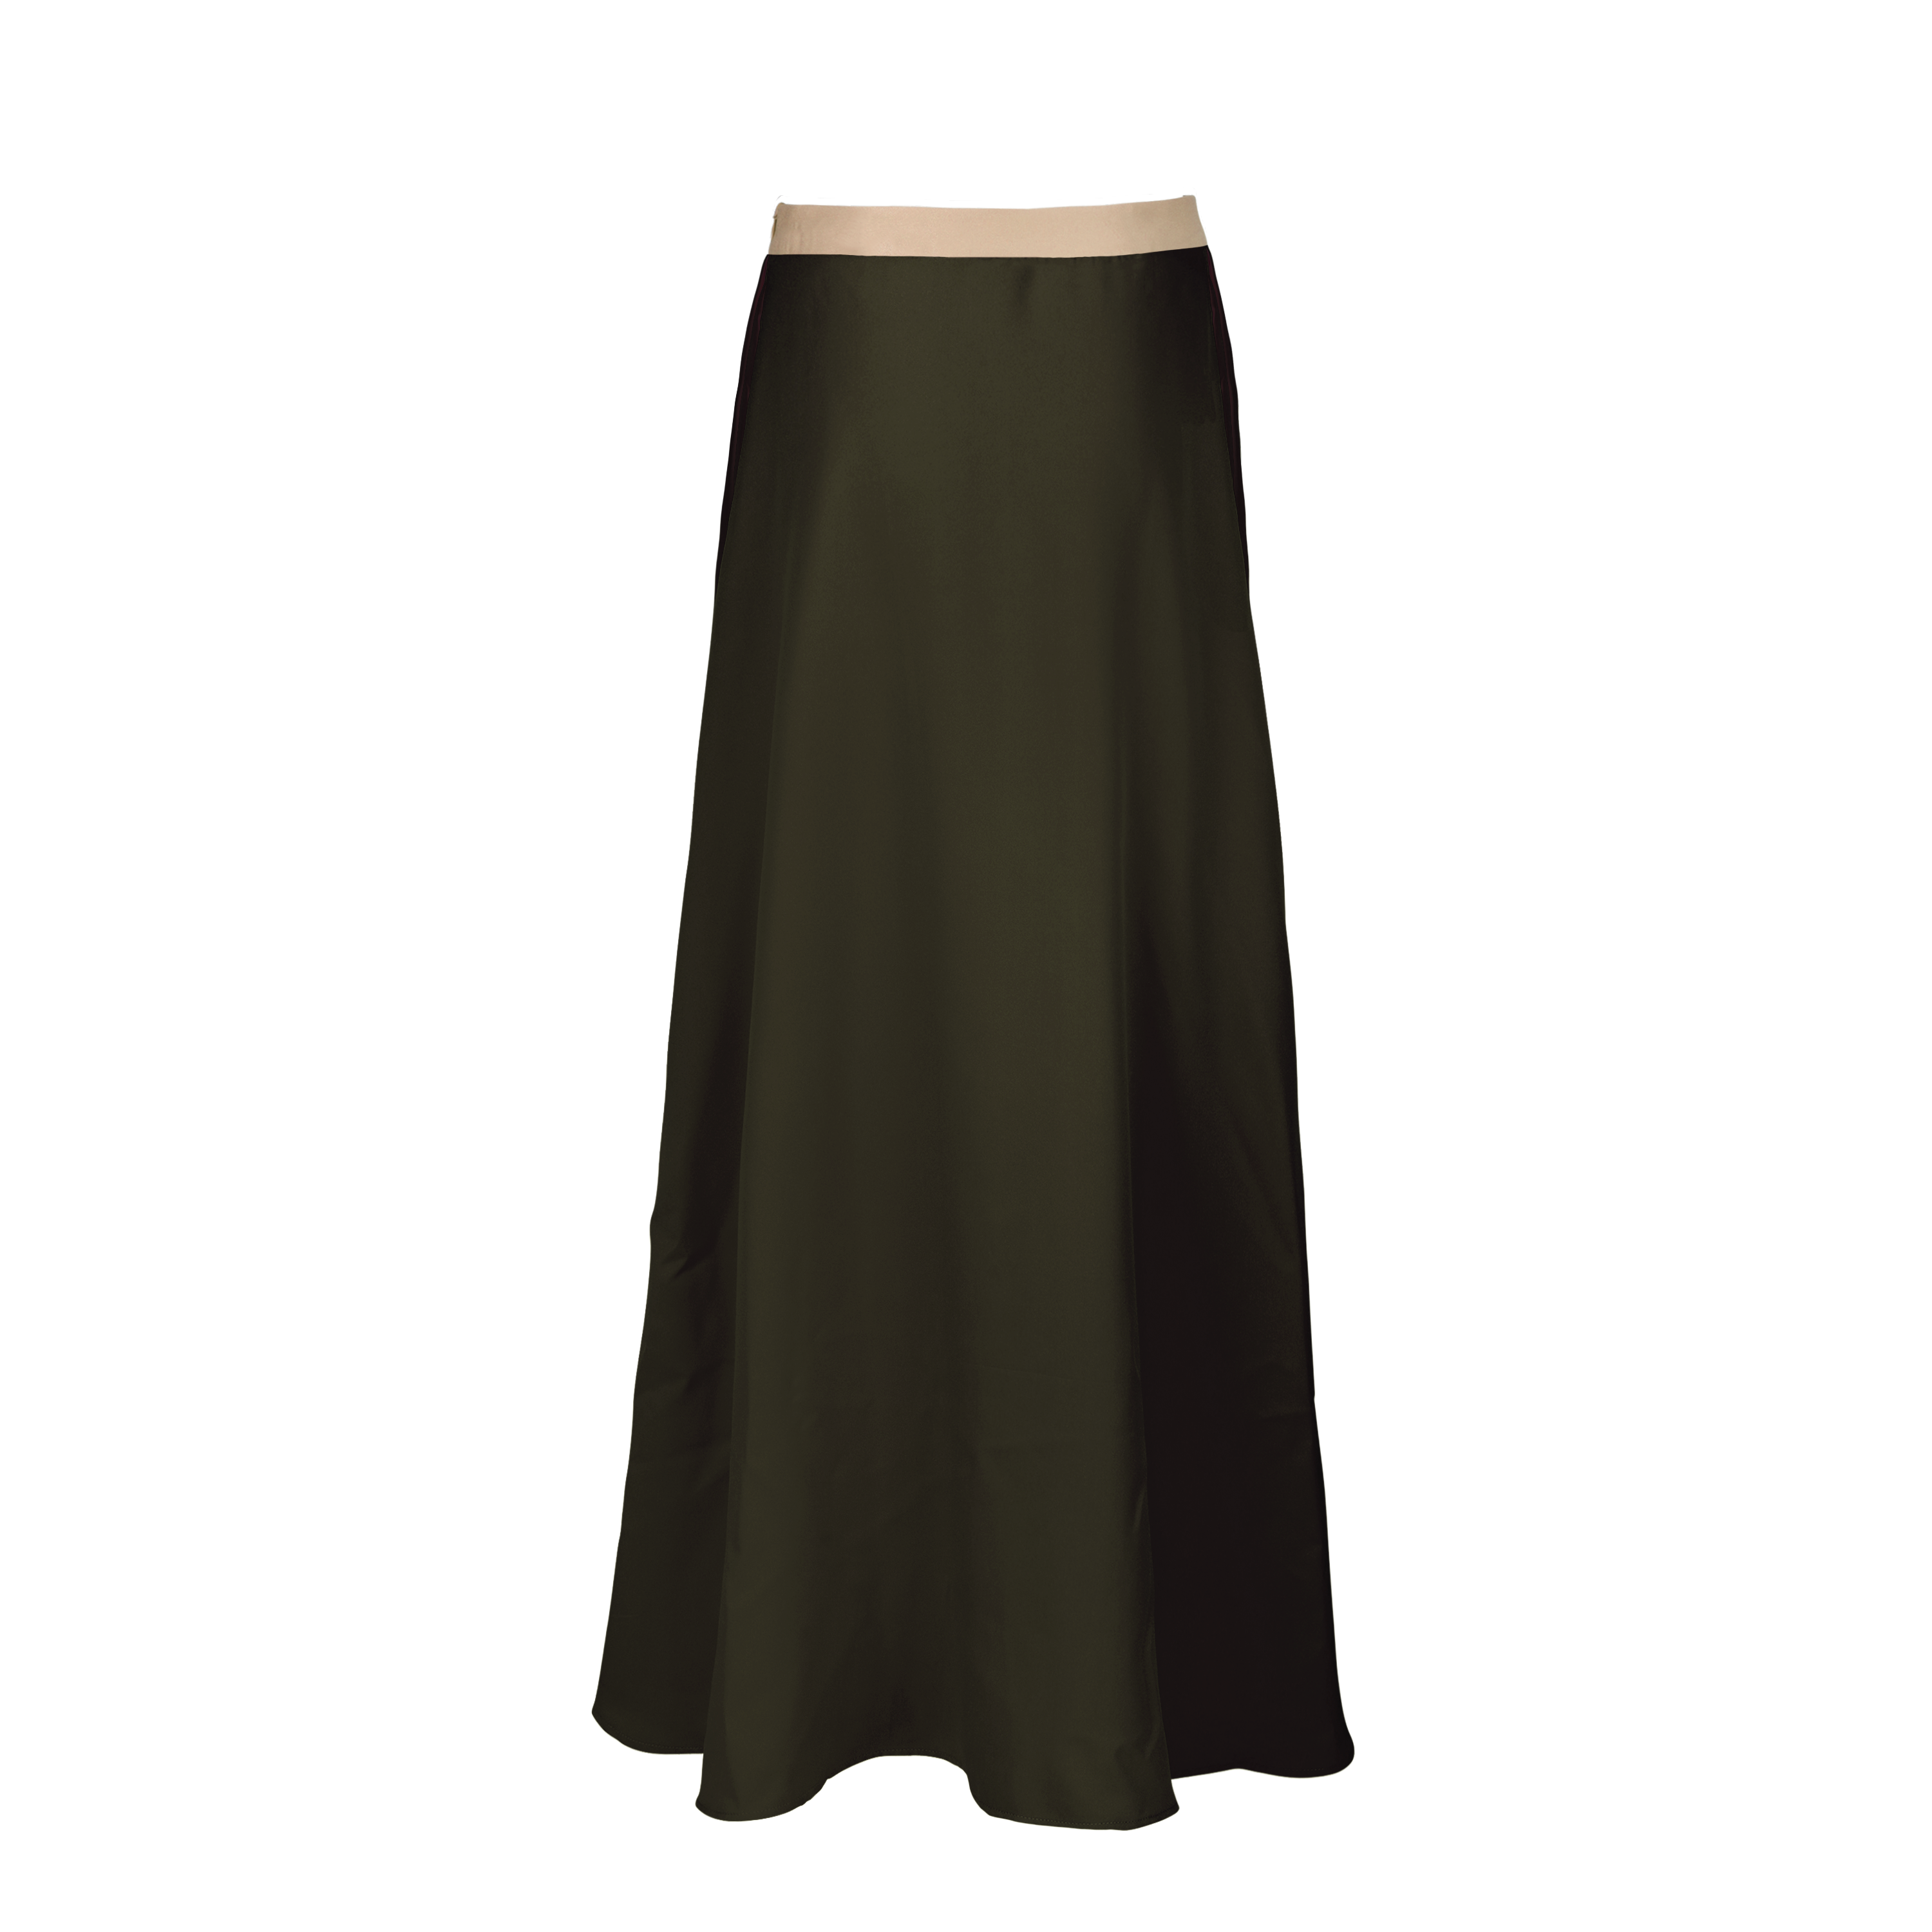 Illy Skirt